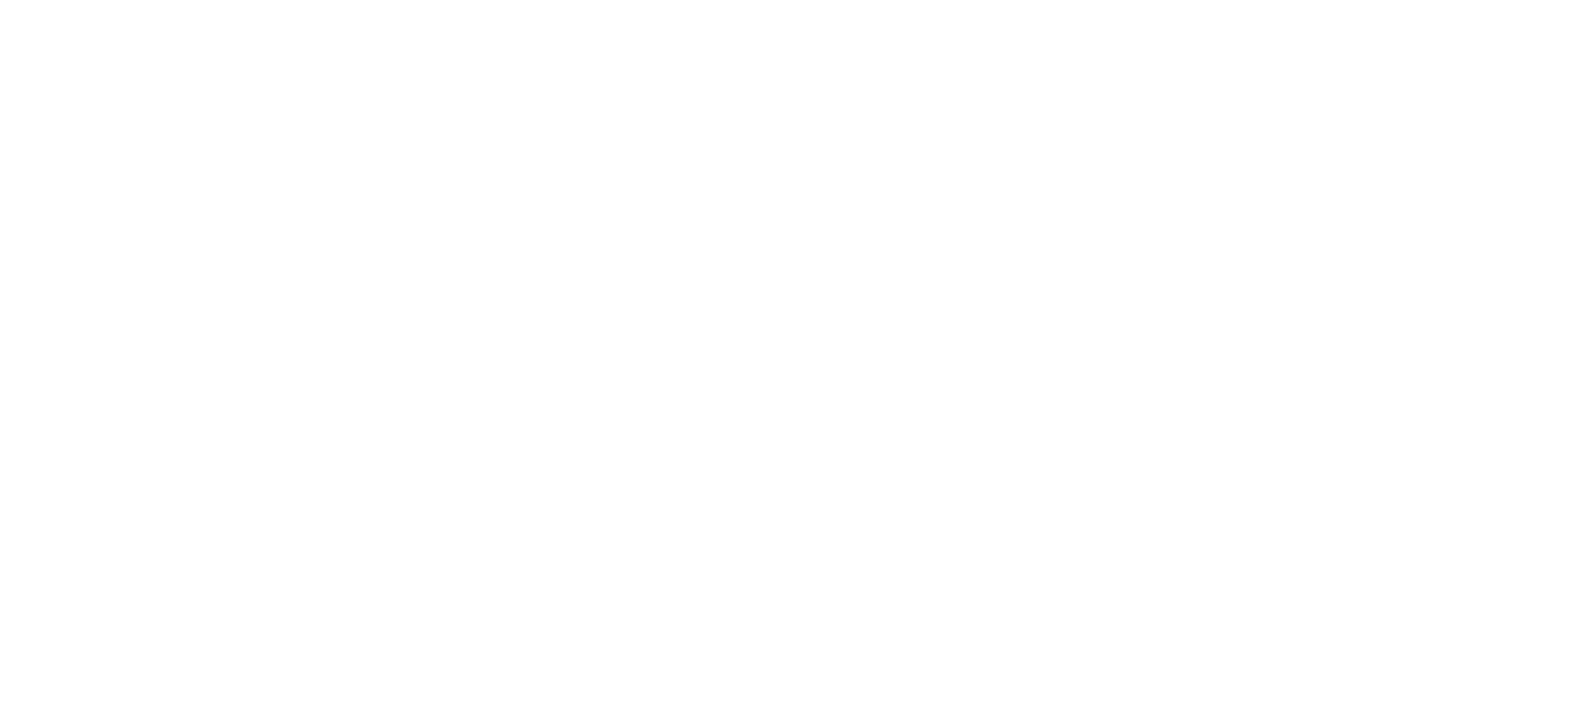 Canoo logo large for dark backgrounds (transparent PNG)